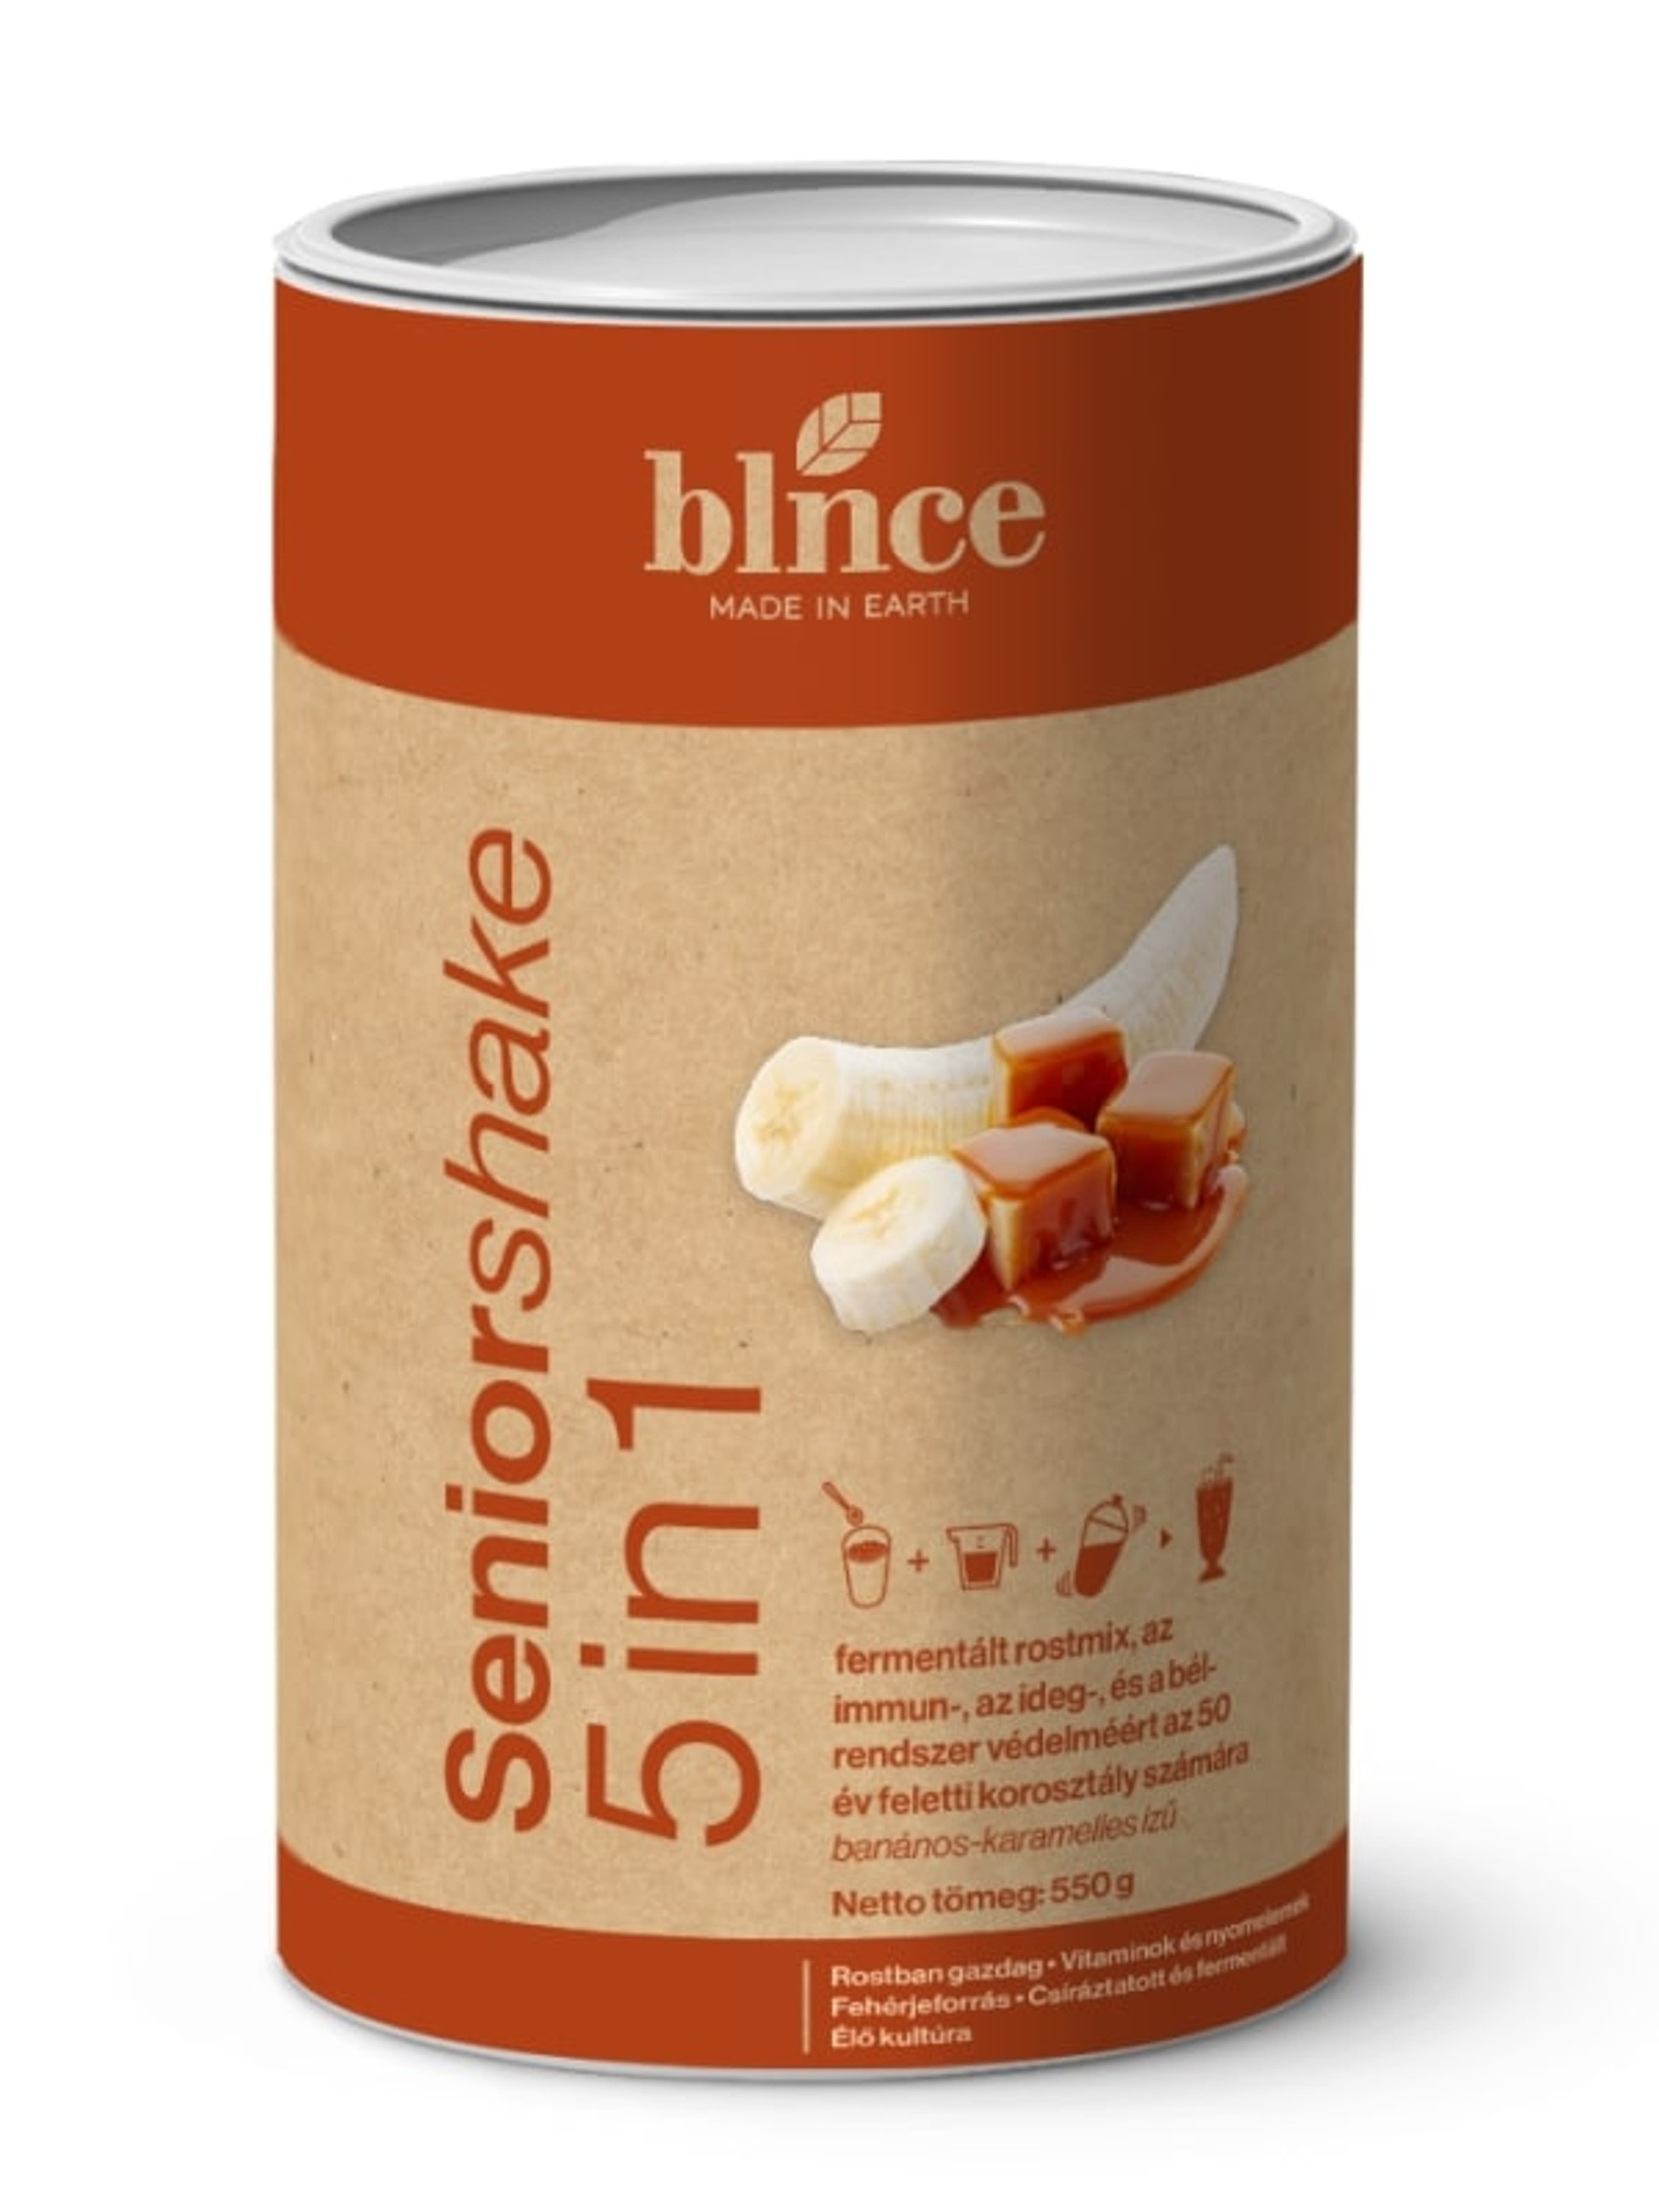 Blnce Seniorshake 5in1 fogyókúrás italpor - 550 g